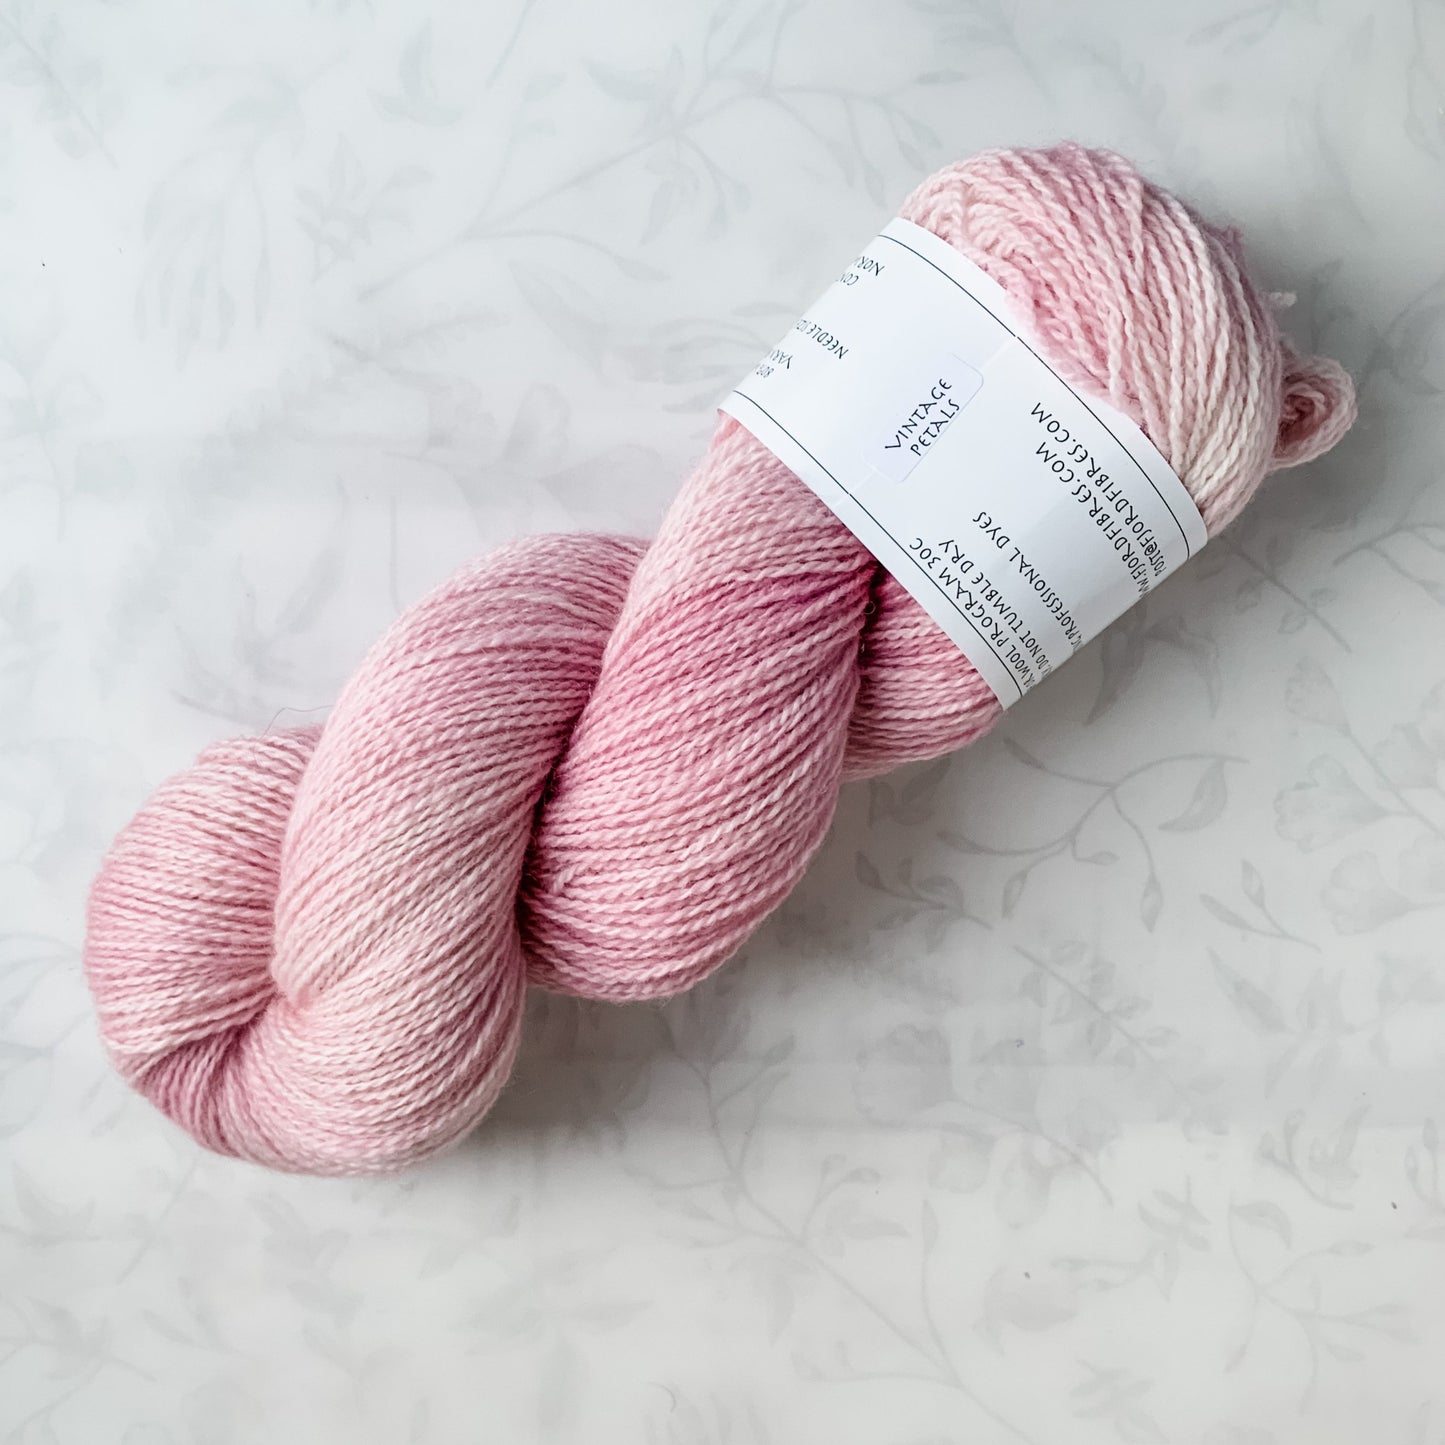 Vintage Petals - Trollfjord sock - Hand Dyed Yarn - Tonal Yarn